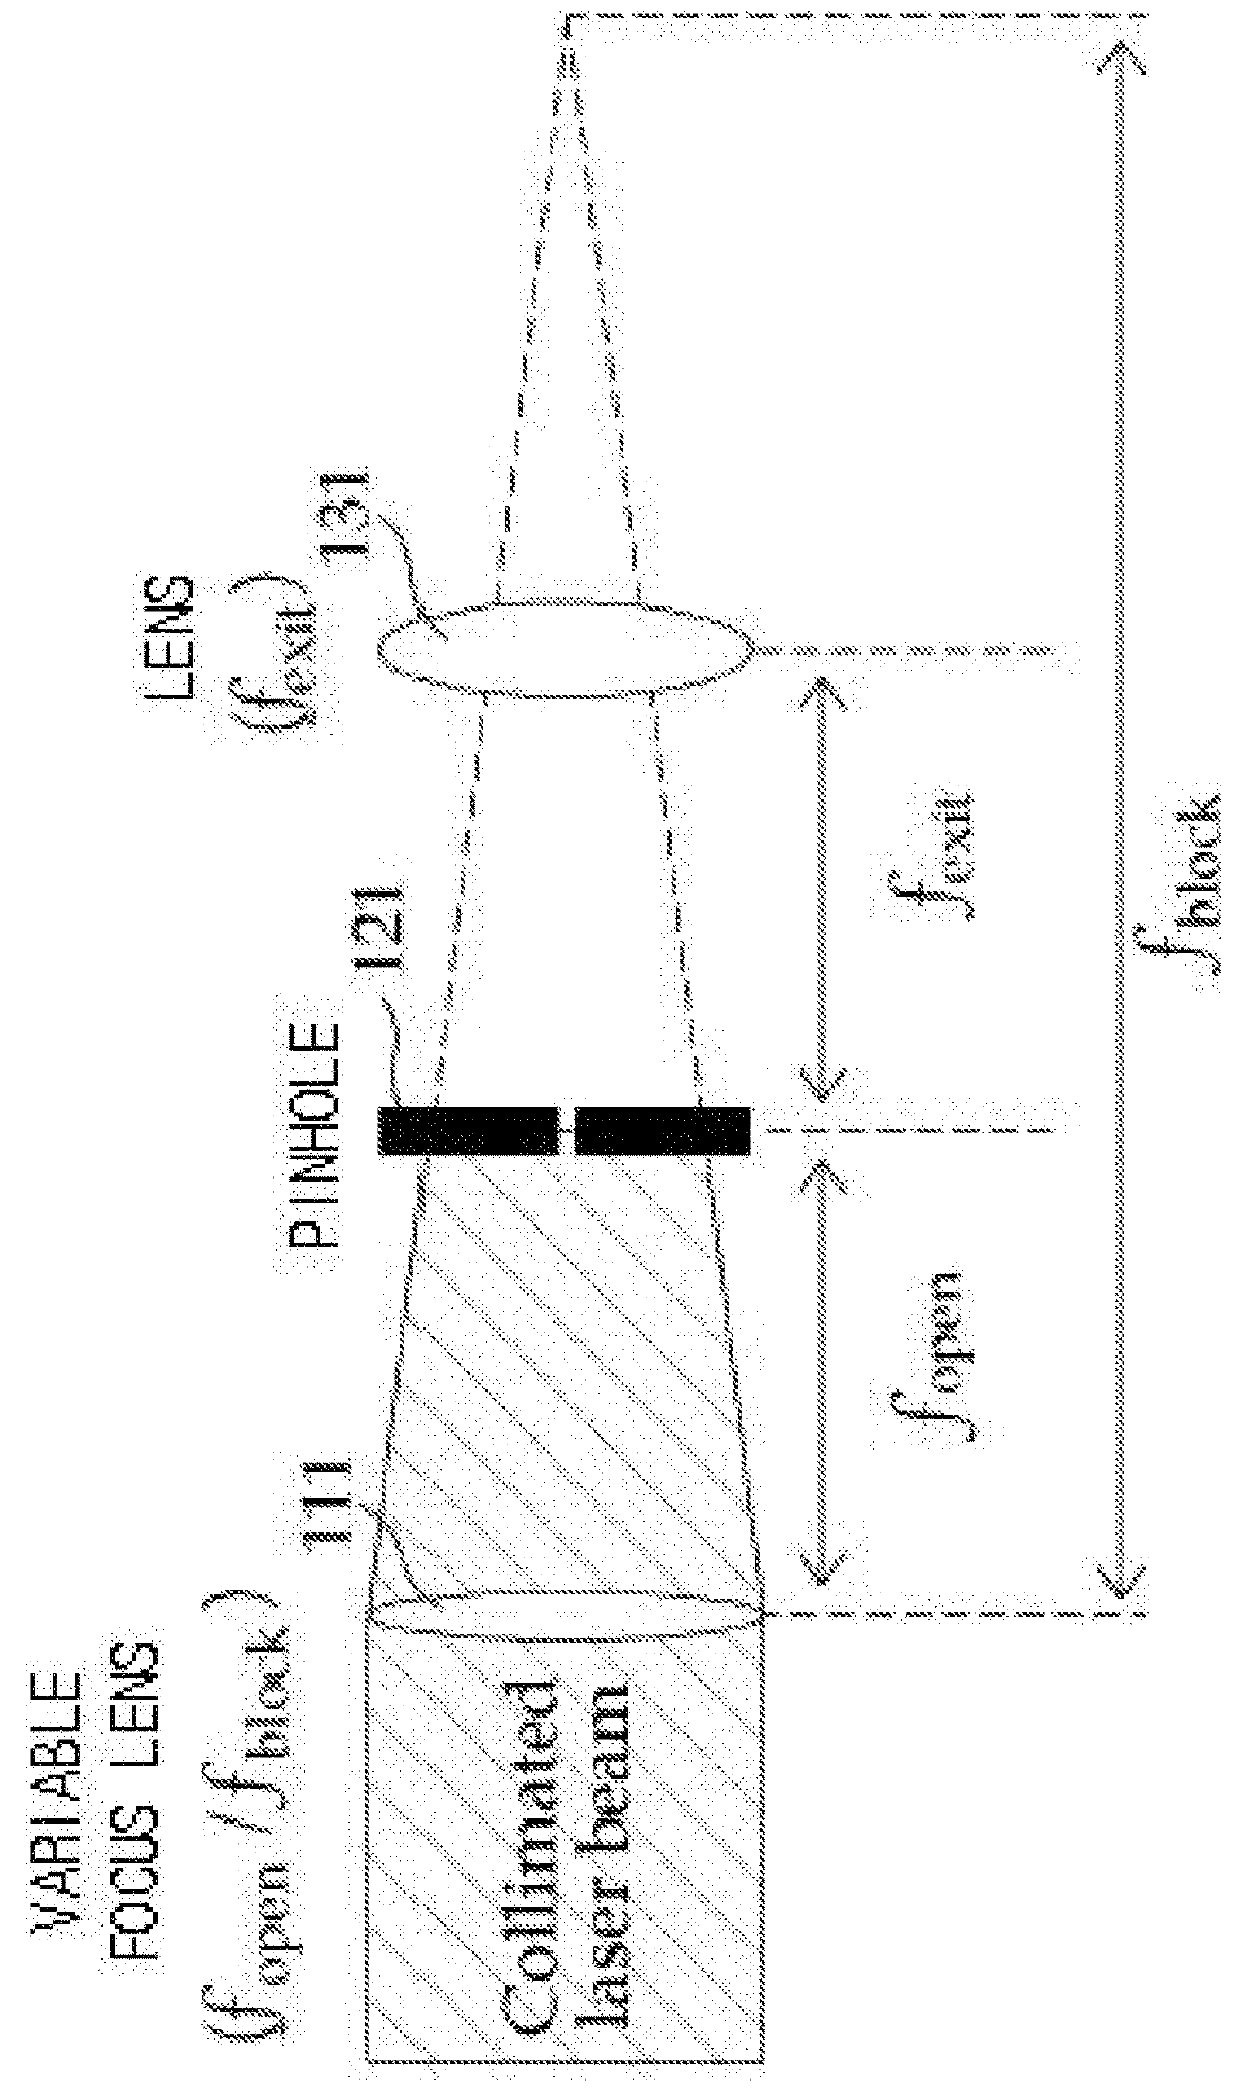 A laser light source shutter system using a variable focus optical element